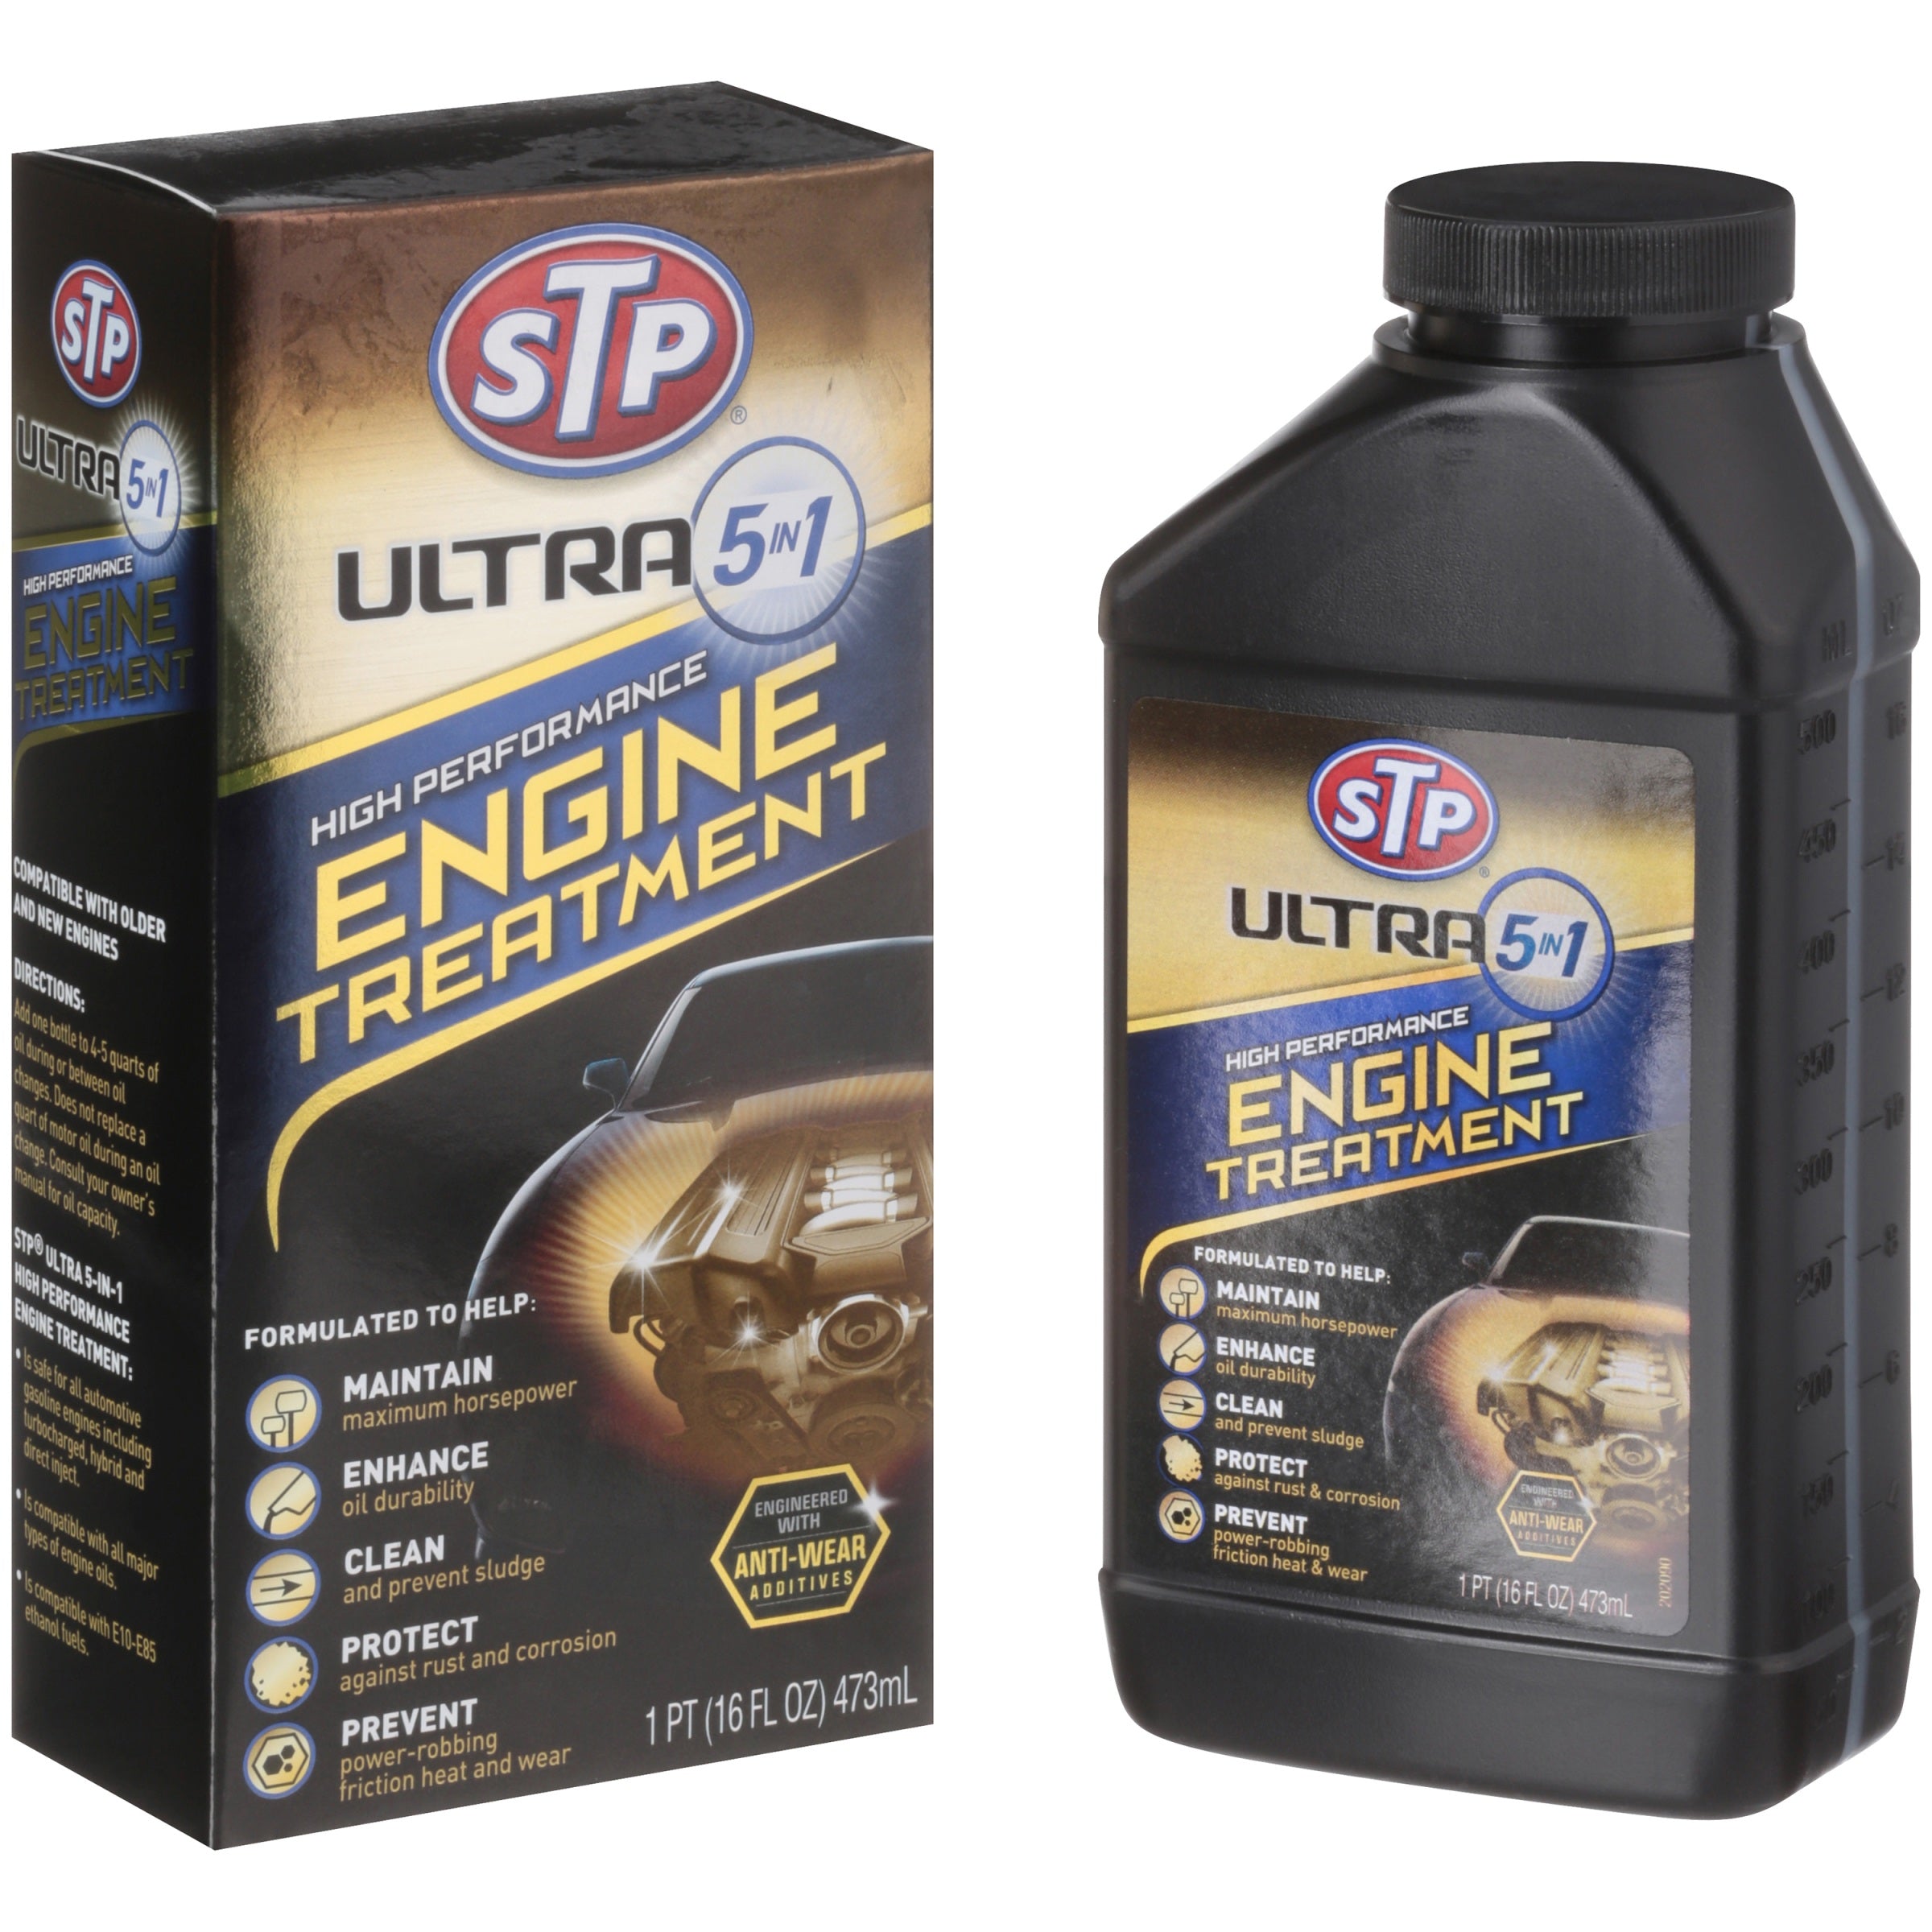 STP Ultra 5in1 Hi Performance Engine Treatment